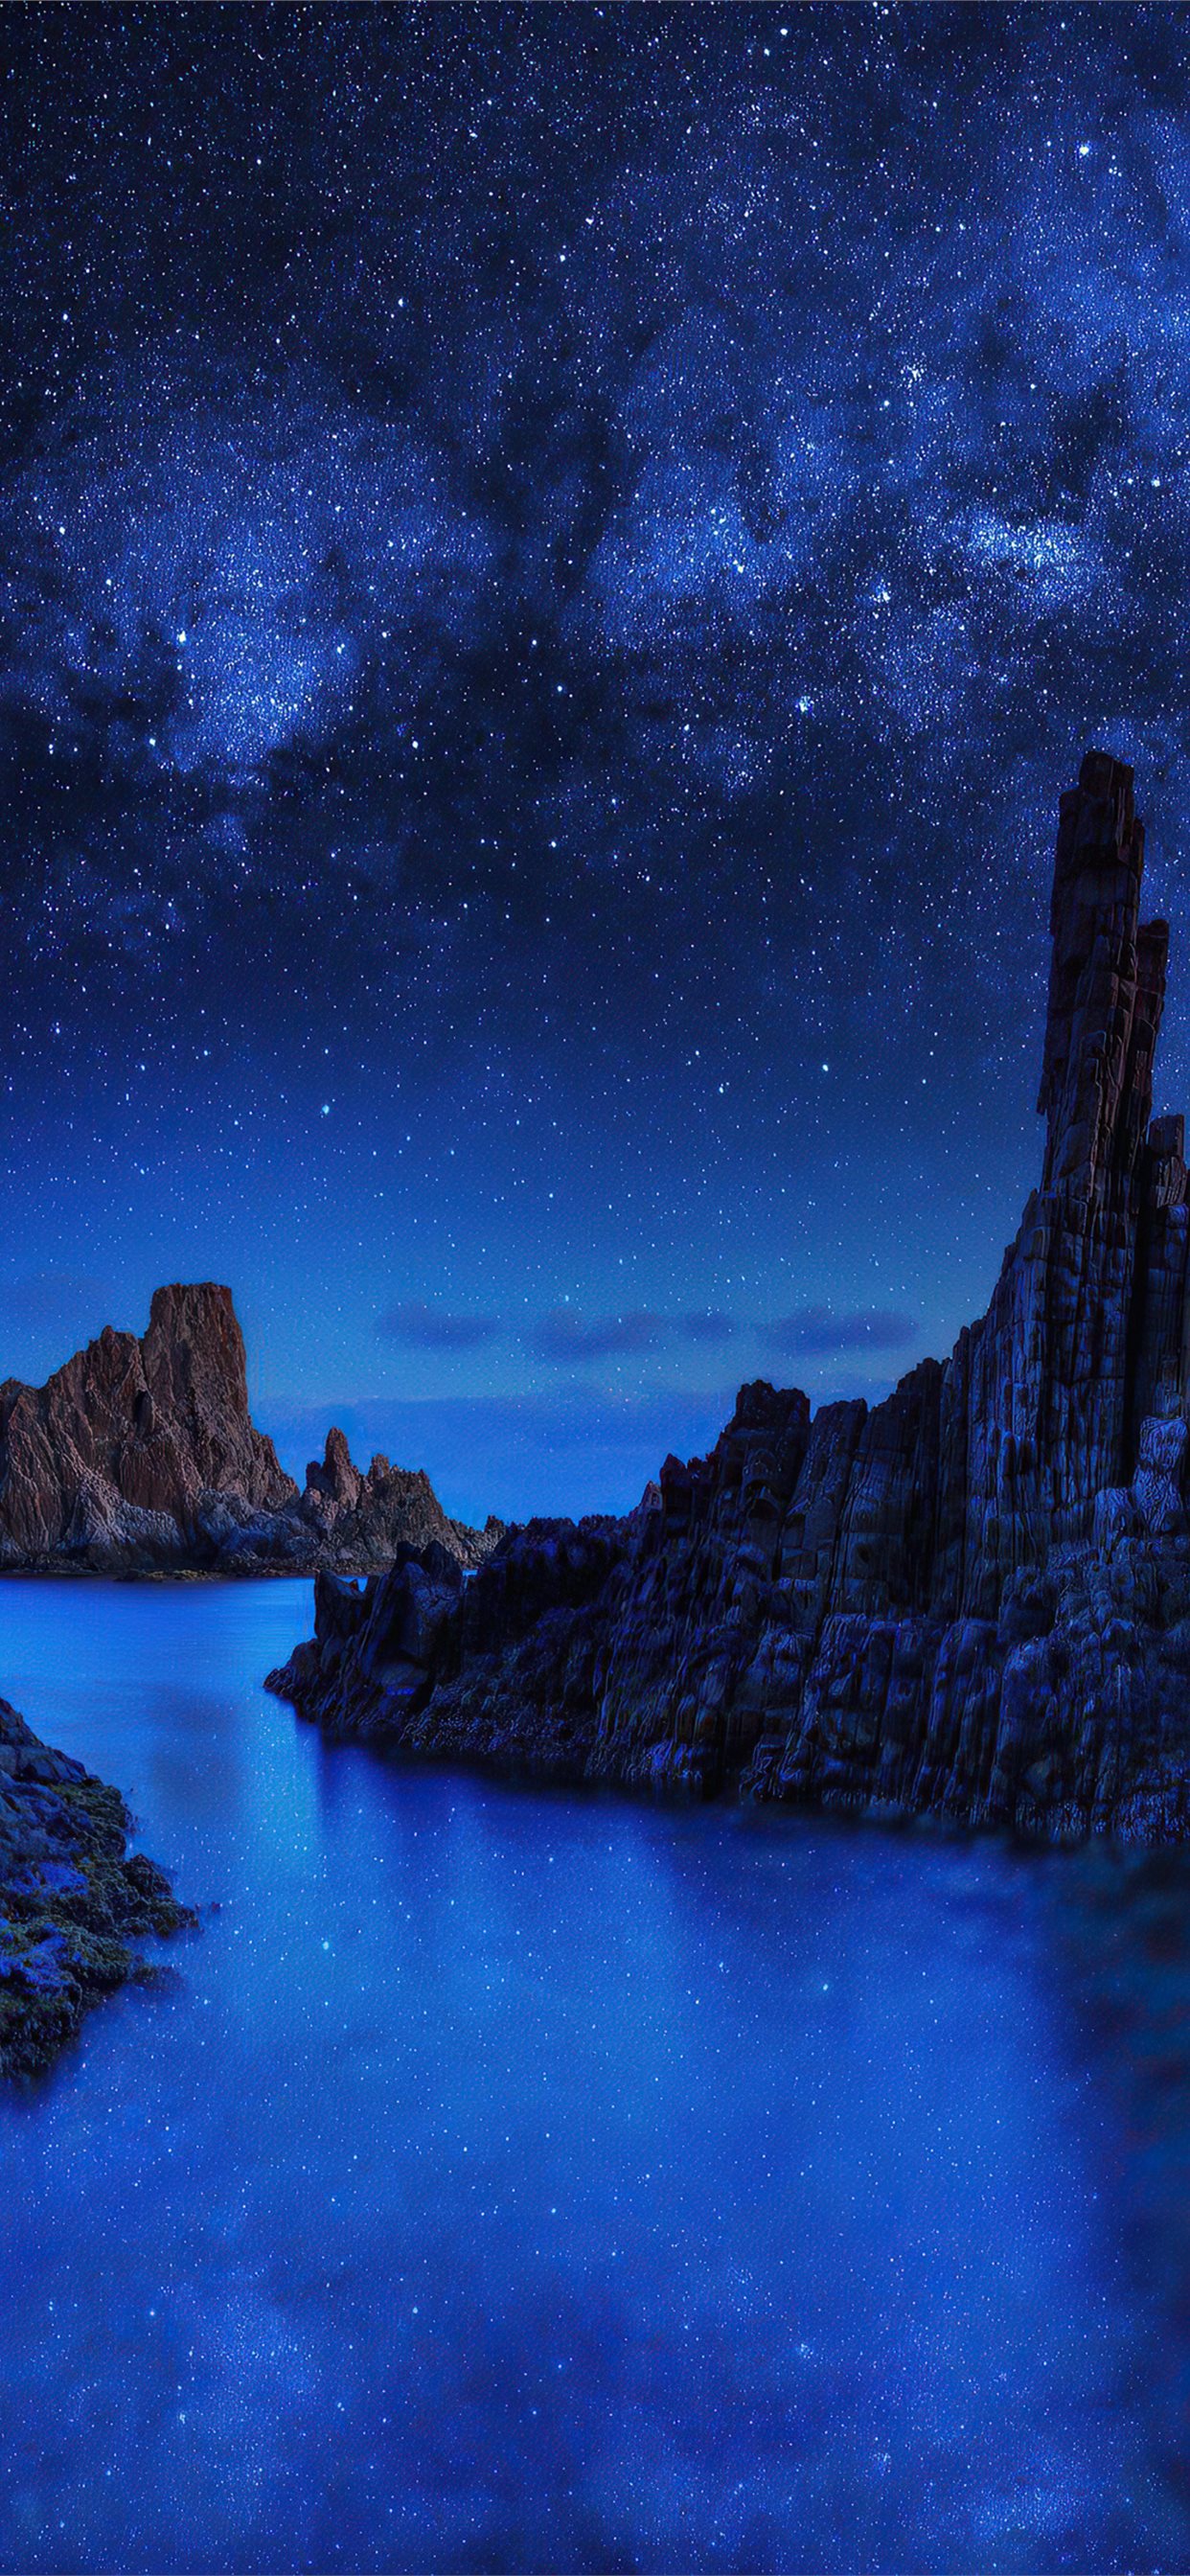 Ocean Rocks On Starry Night 4K Iphone X Wallpapers Free Download